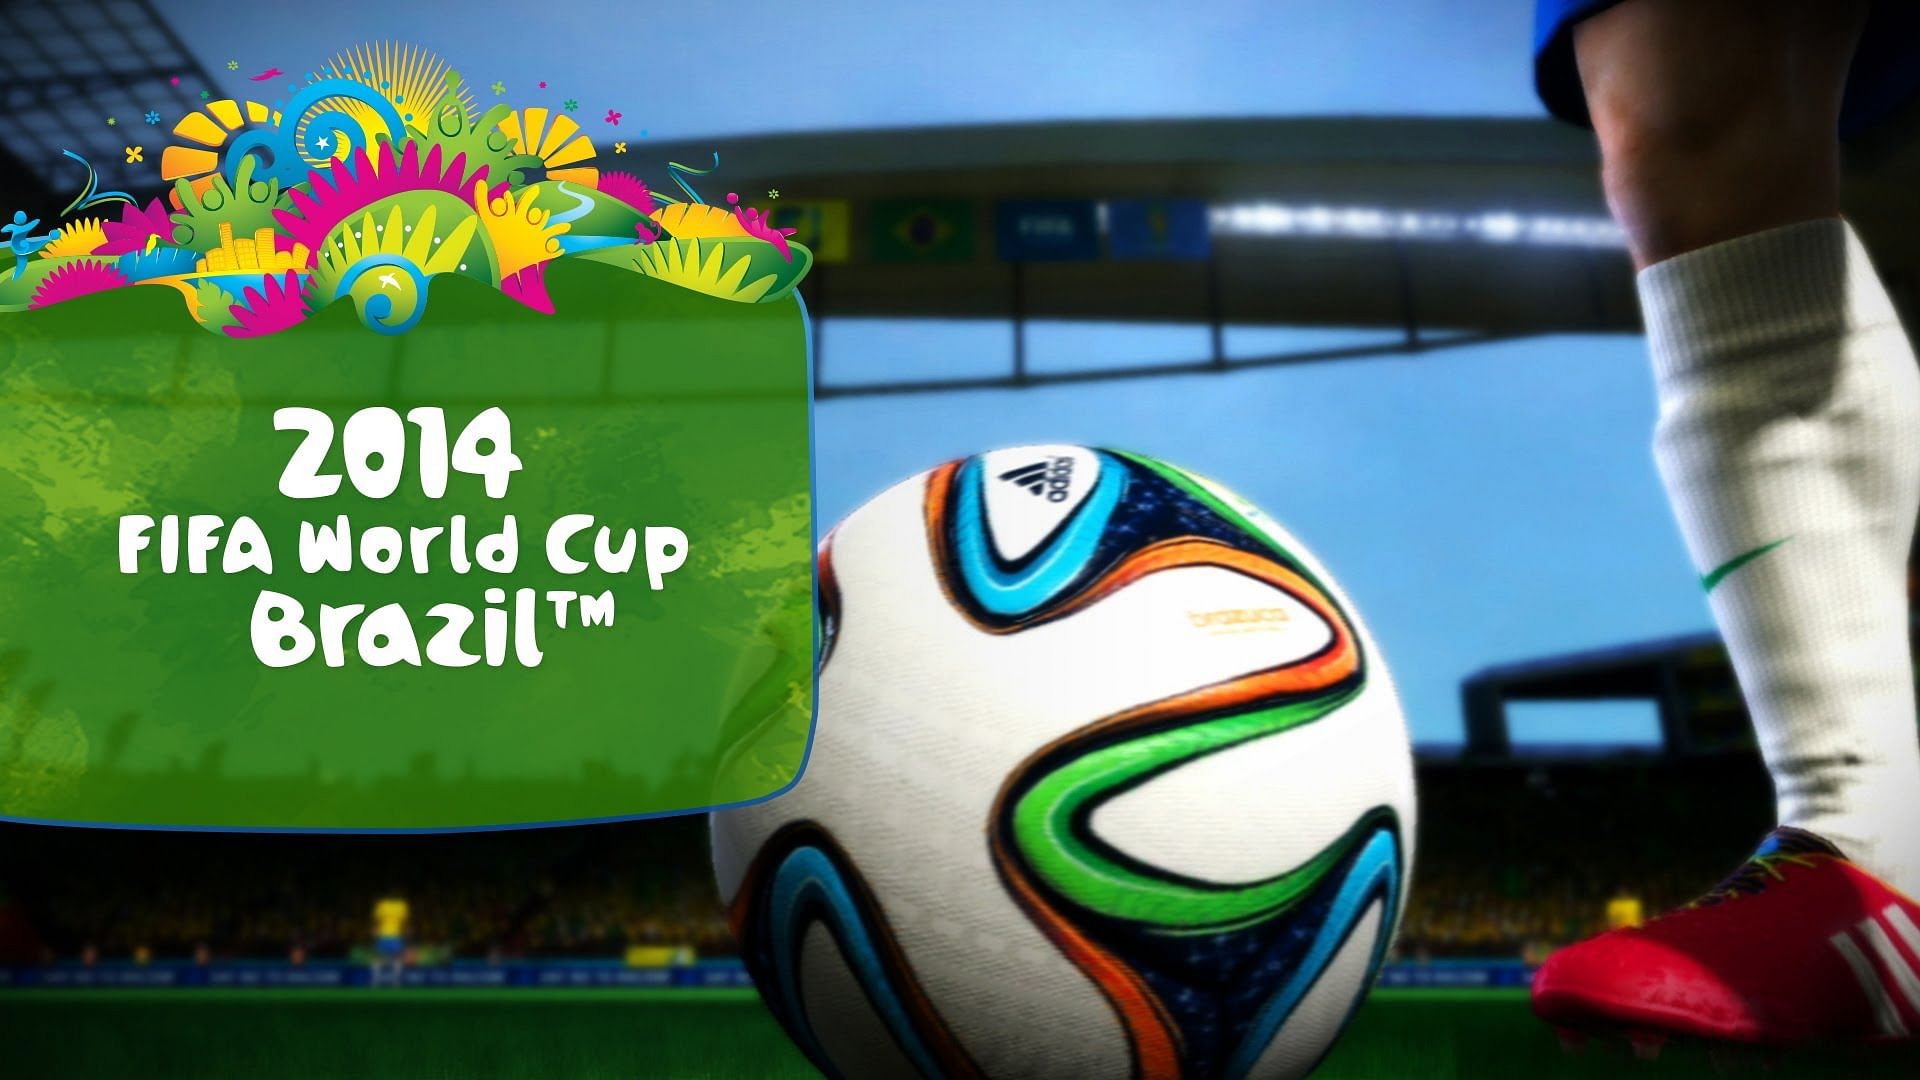 ea-sports-2014-fifa-world-cup-br-1401981081.jpg